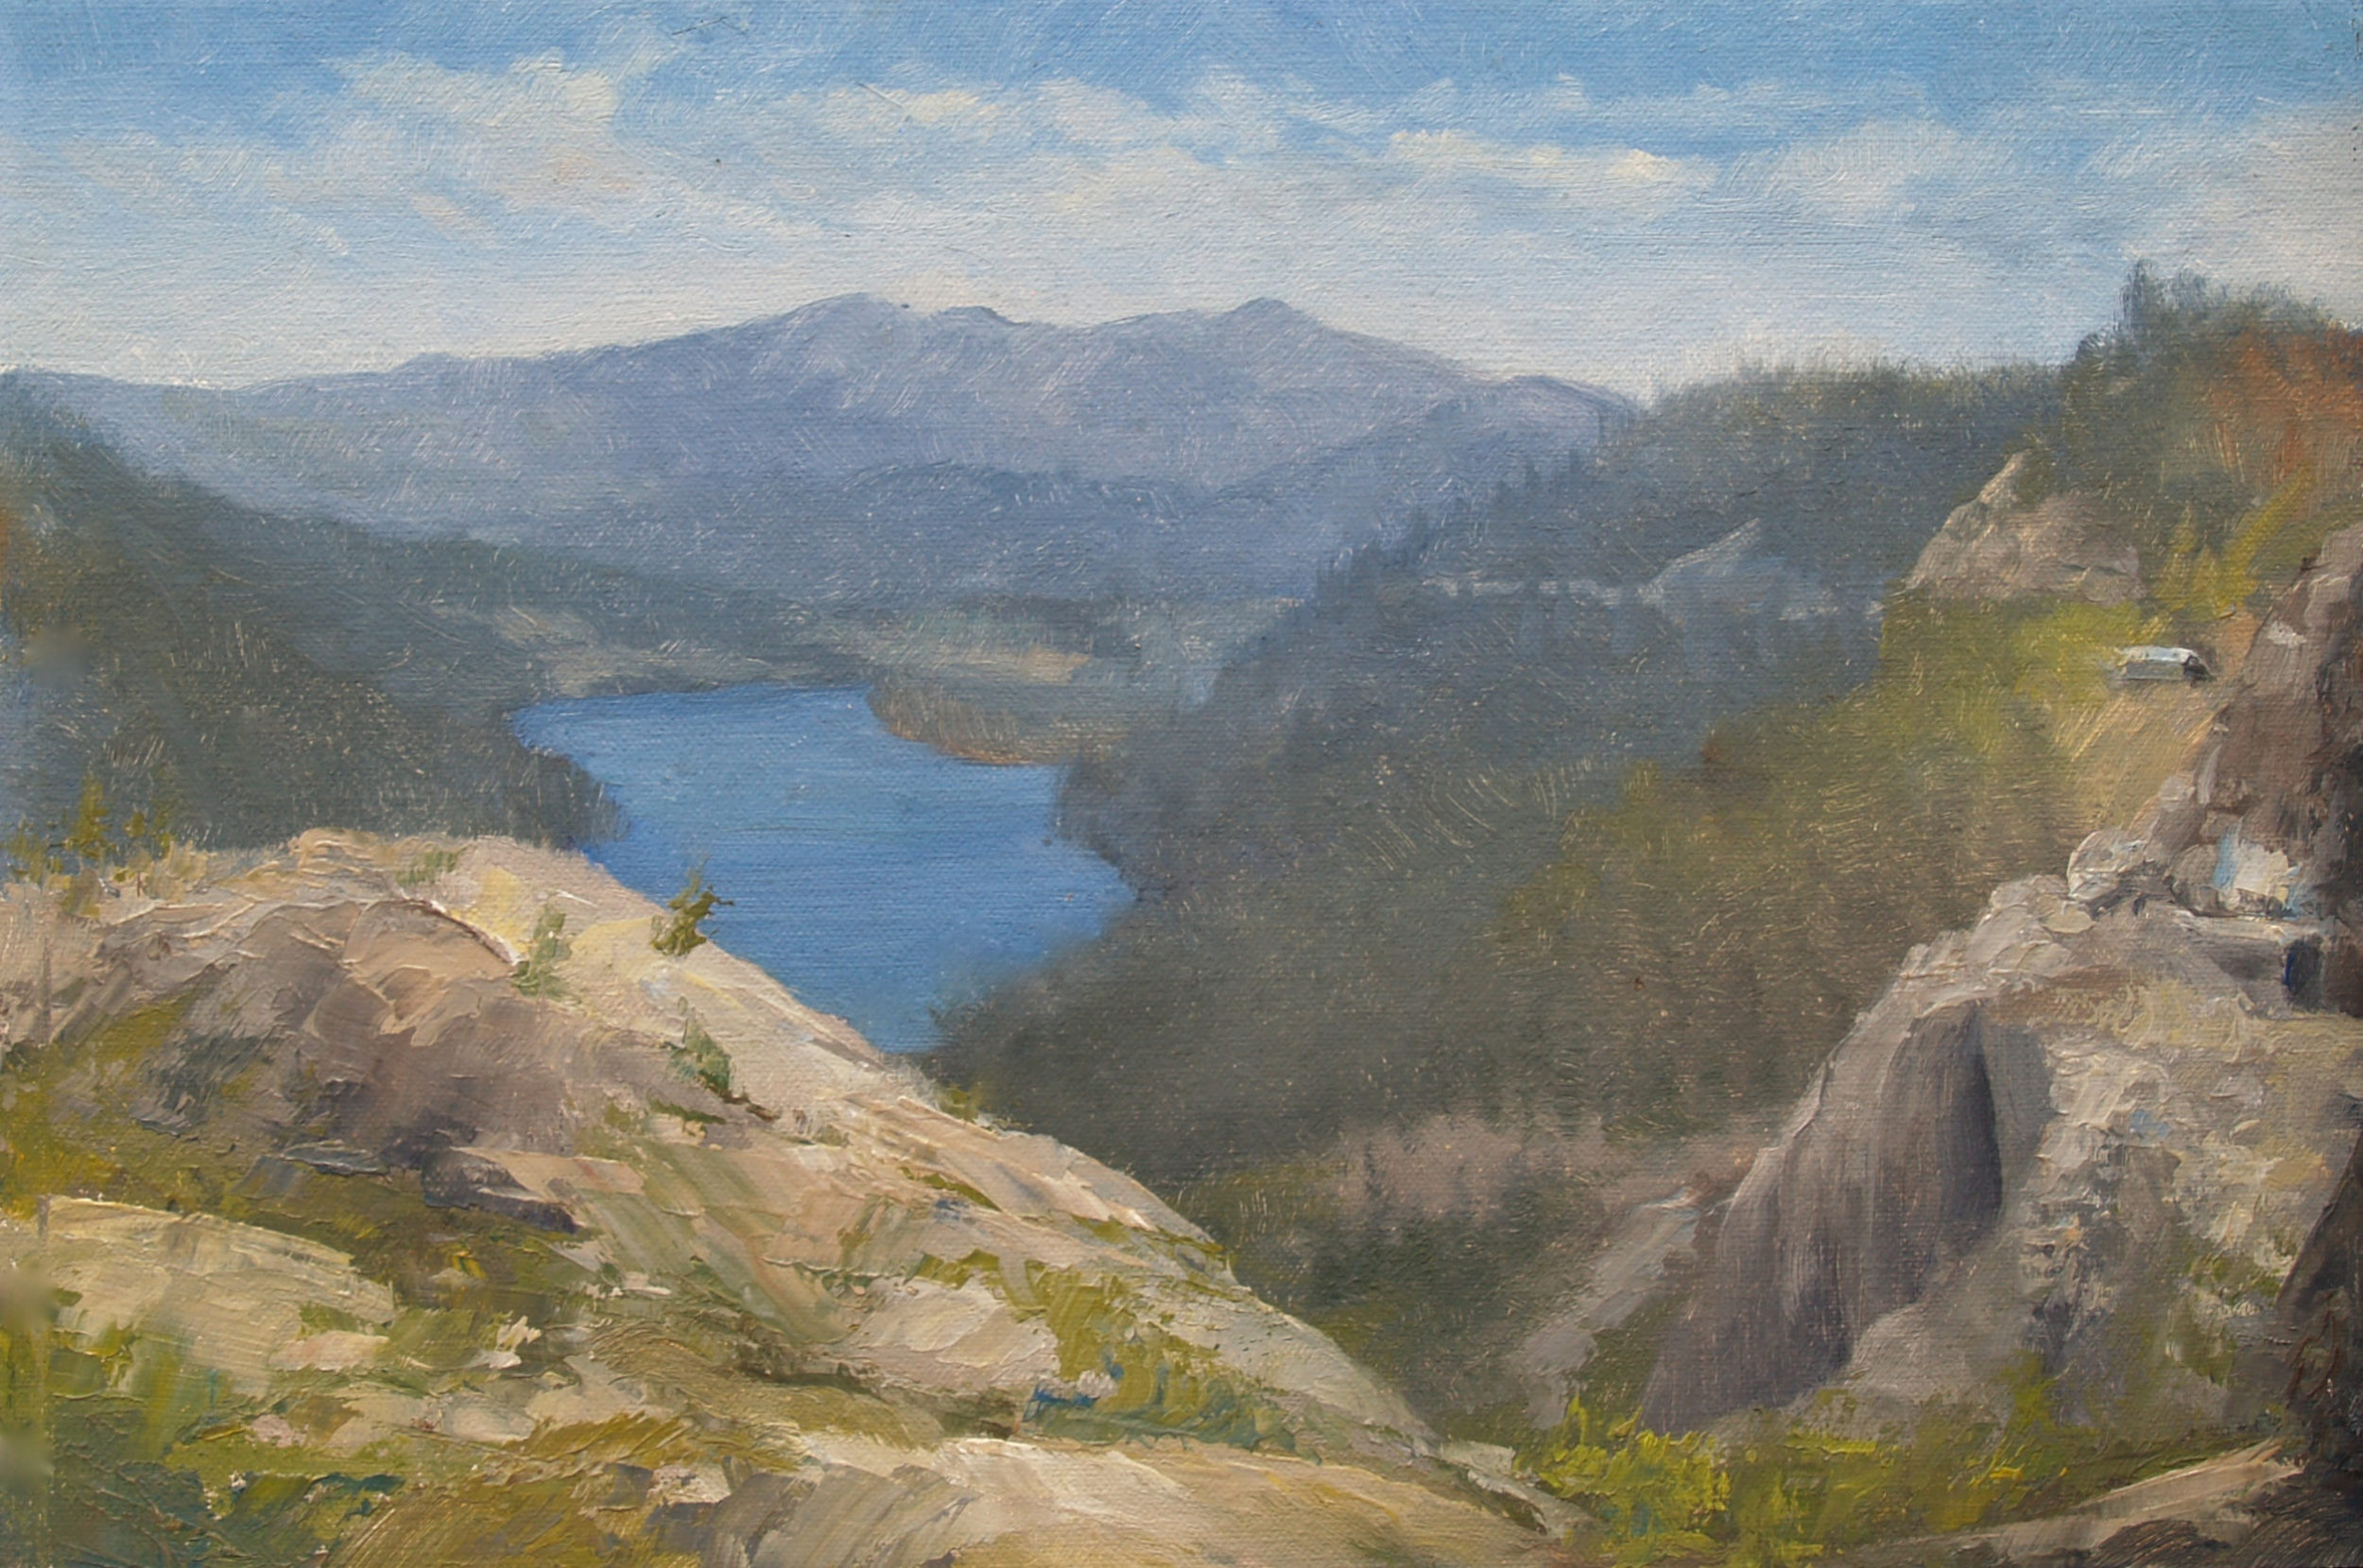 Sierra Nevada Painting: Donner Lake Study